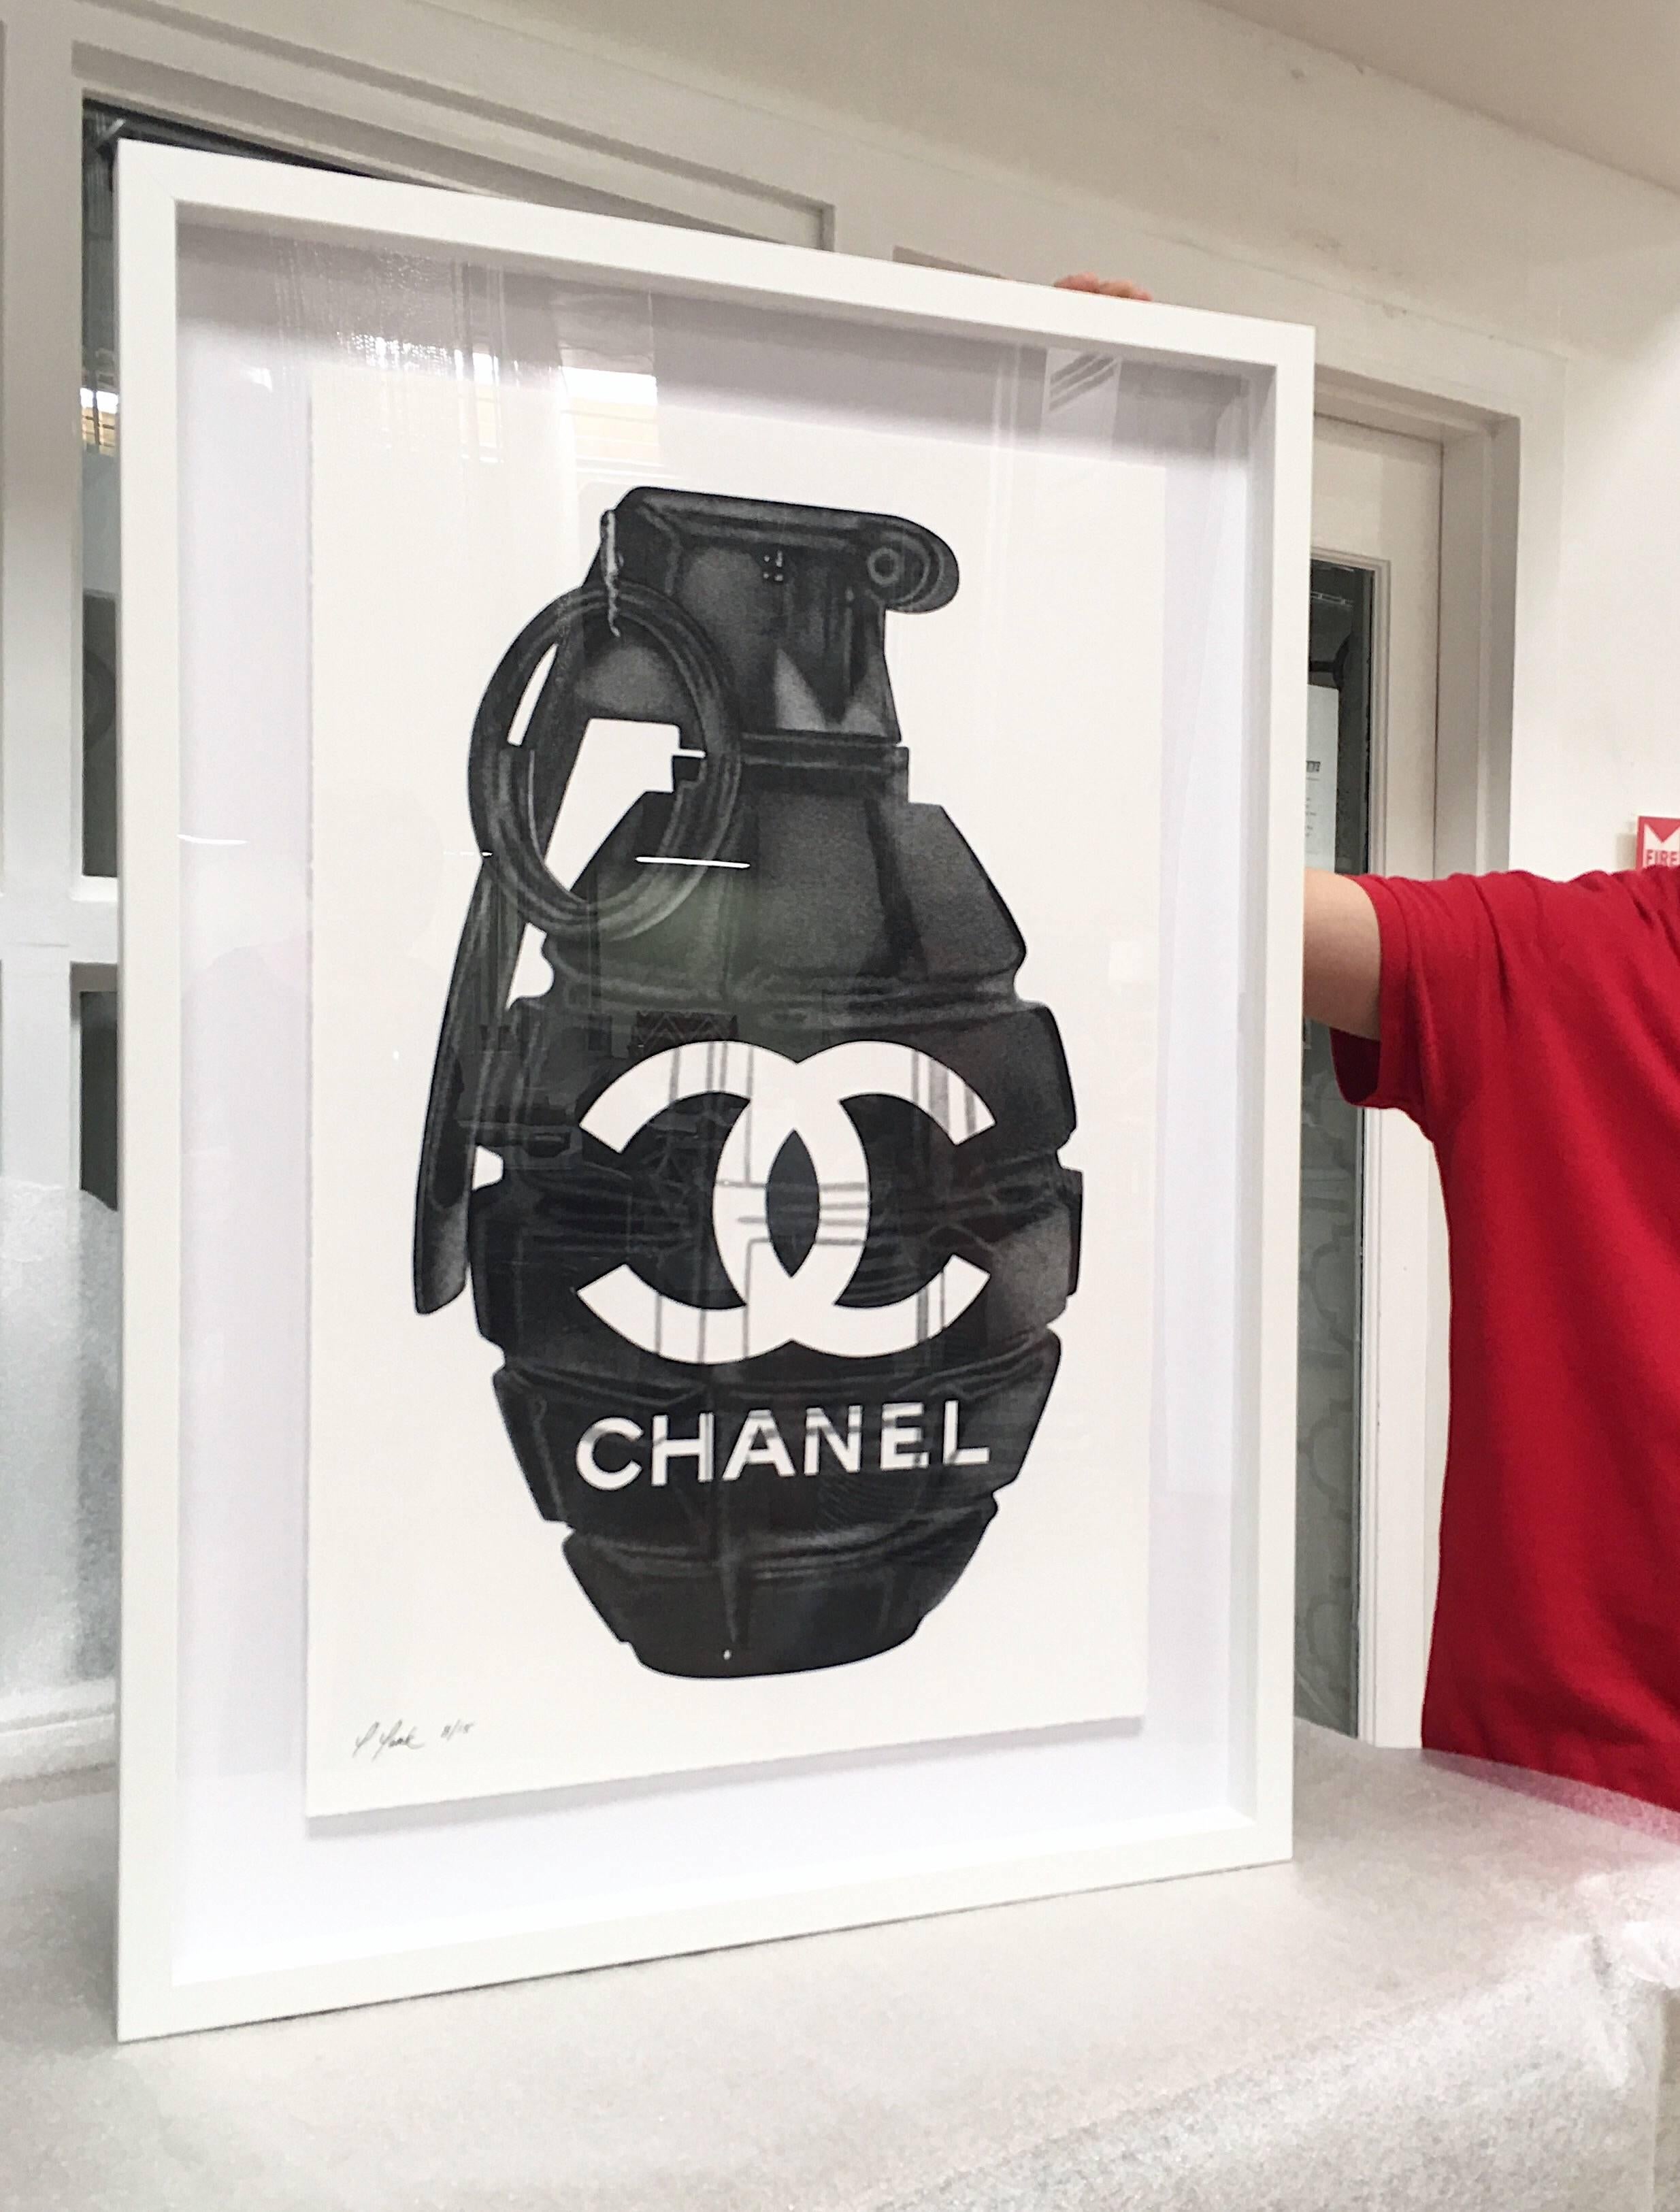 Die In Chanel - Art by Yelena York